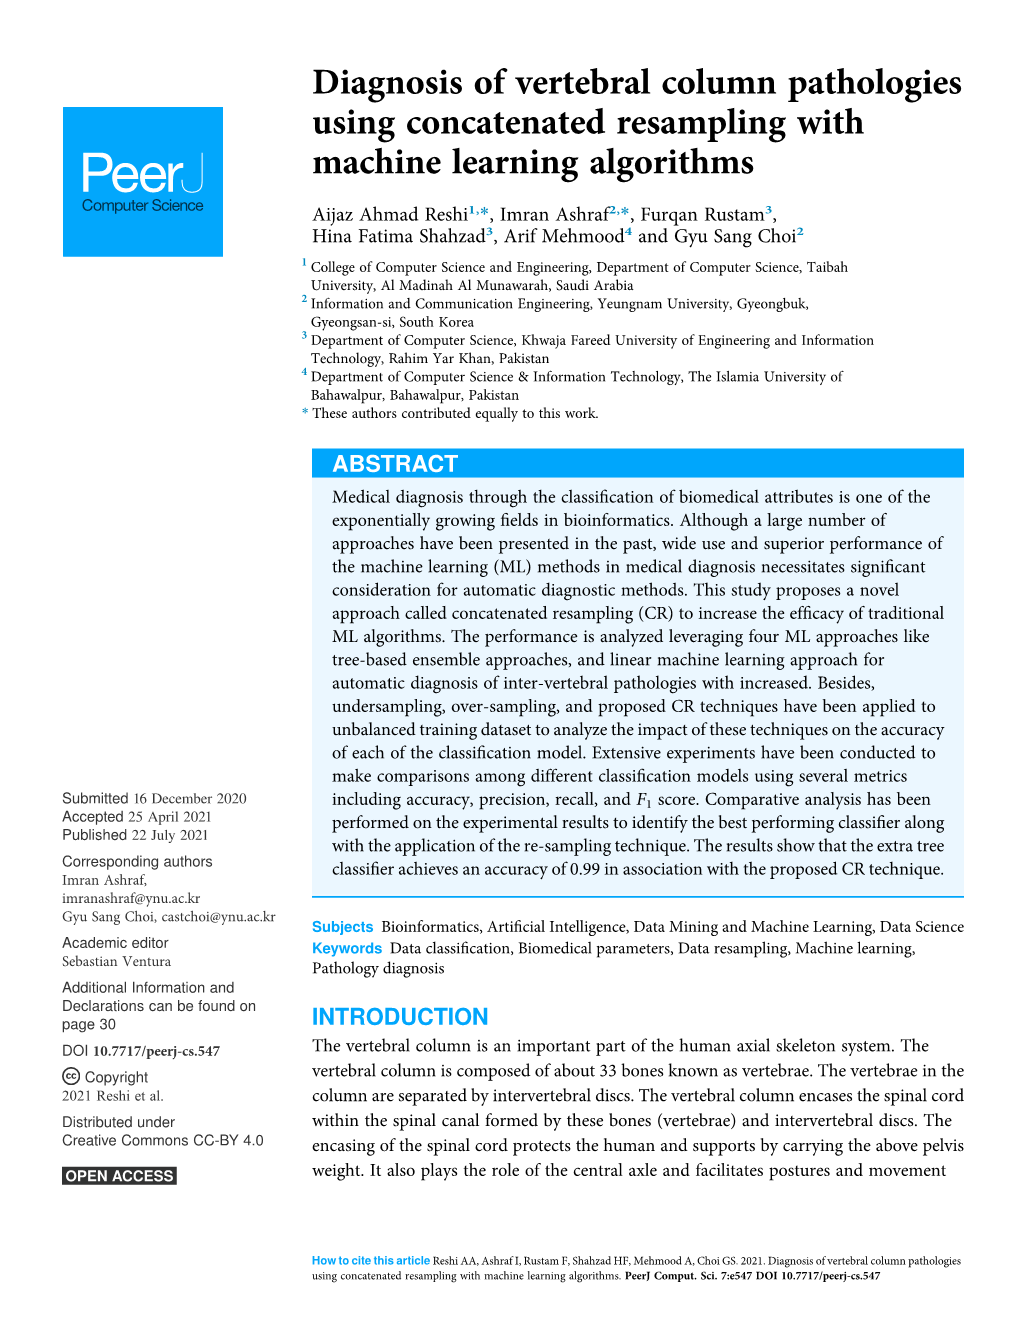 Diagnosis of Vertebral Column Pathologies Using Concatenated Resampling with Machine Learning Algorithms